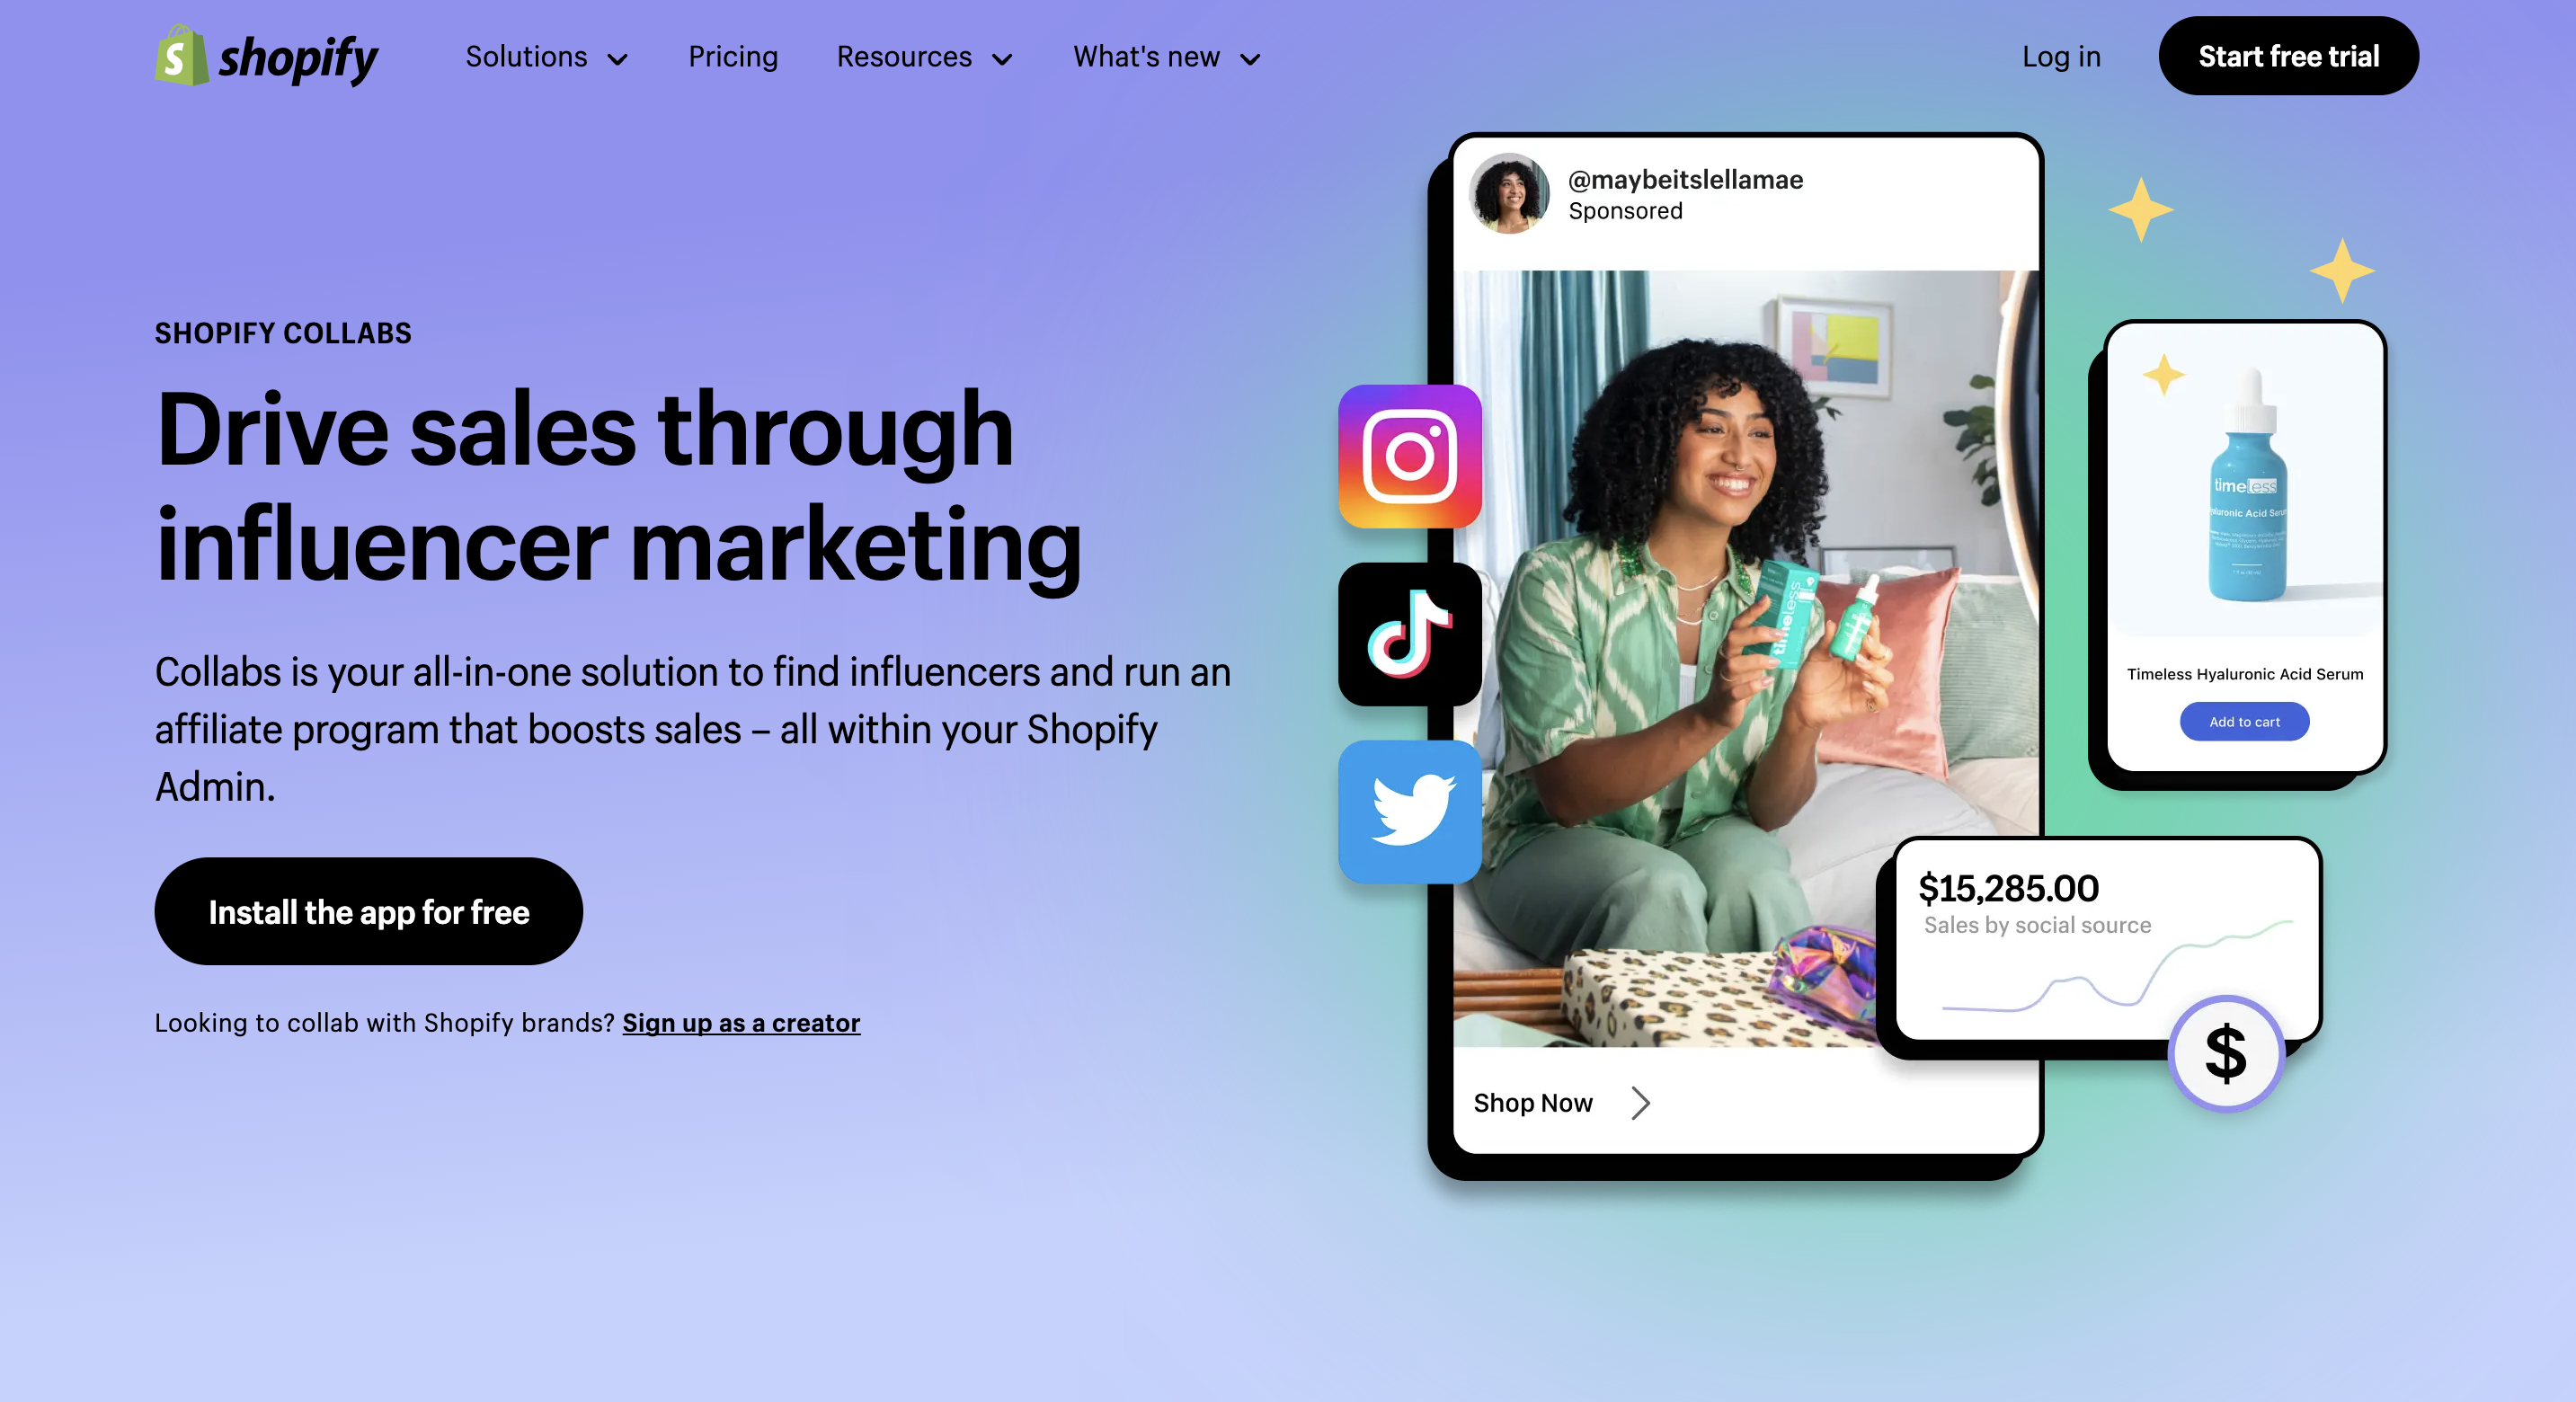 A screenshot of influencer marketing platform Shopify Collabs' website